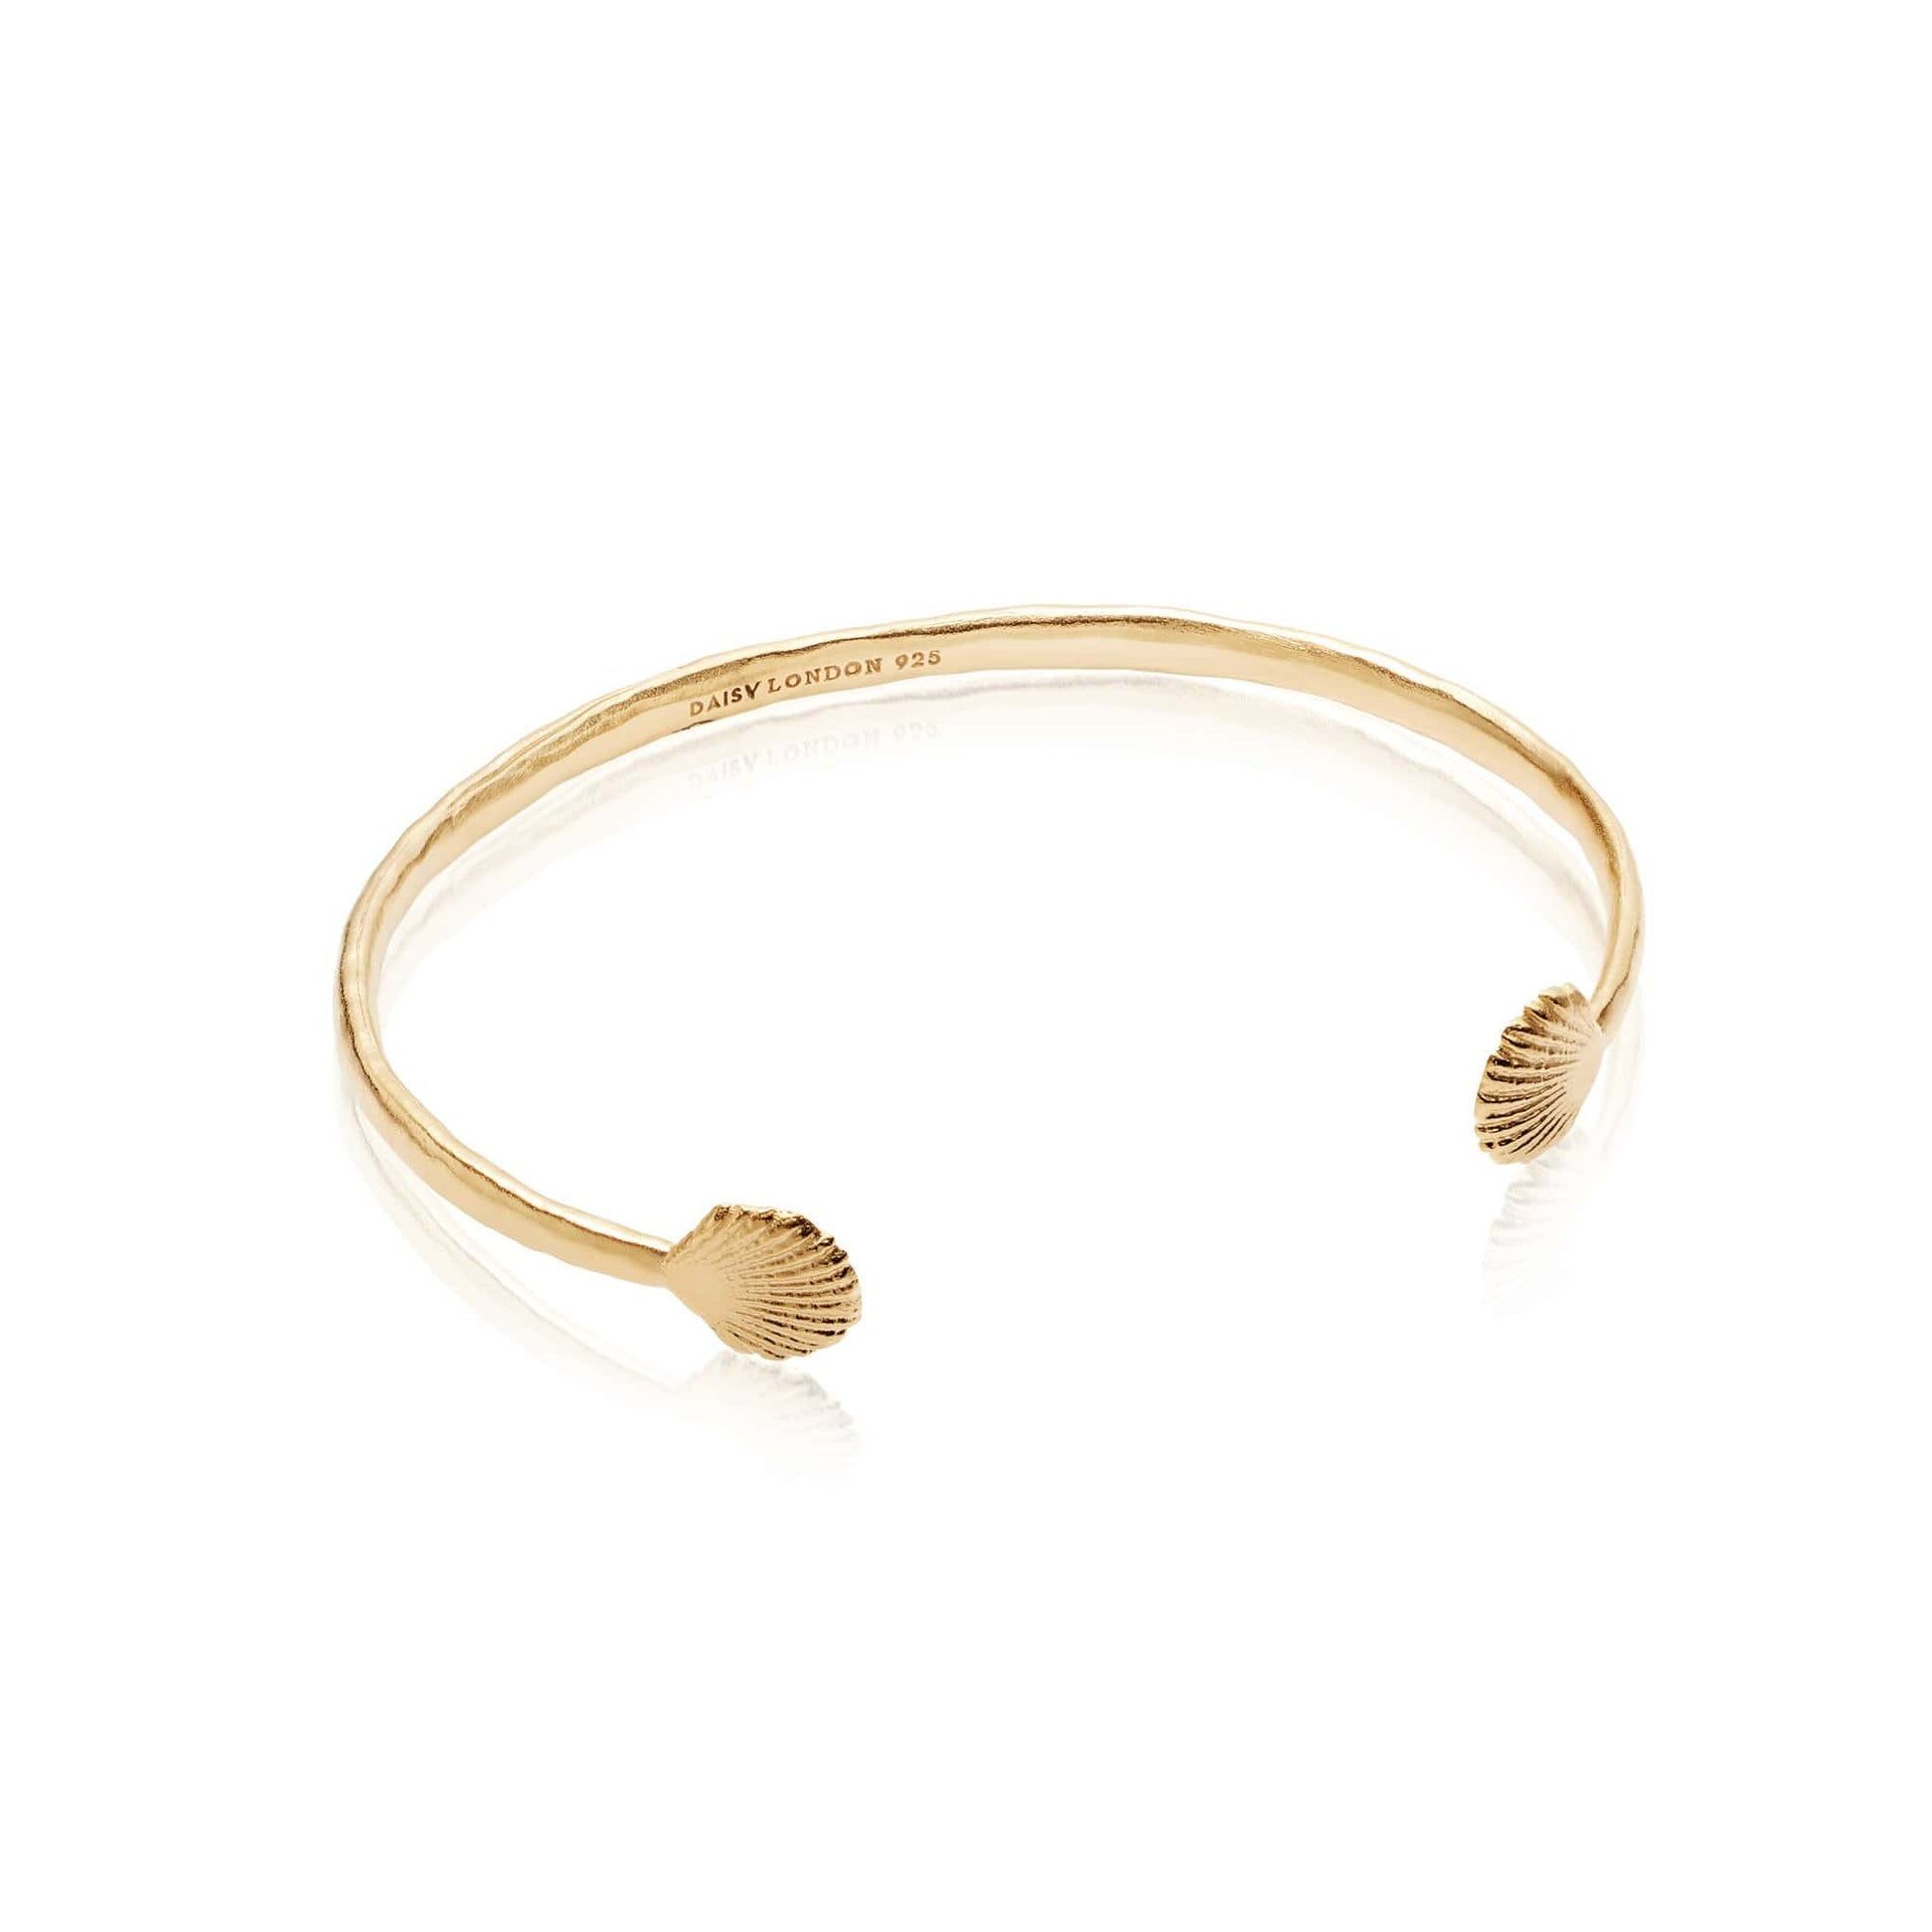 Jewelry Fashion Style Gold Plated Charm Bracelet Bangle Gift For Women Neu 